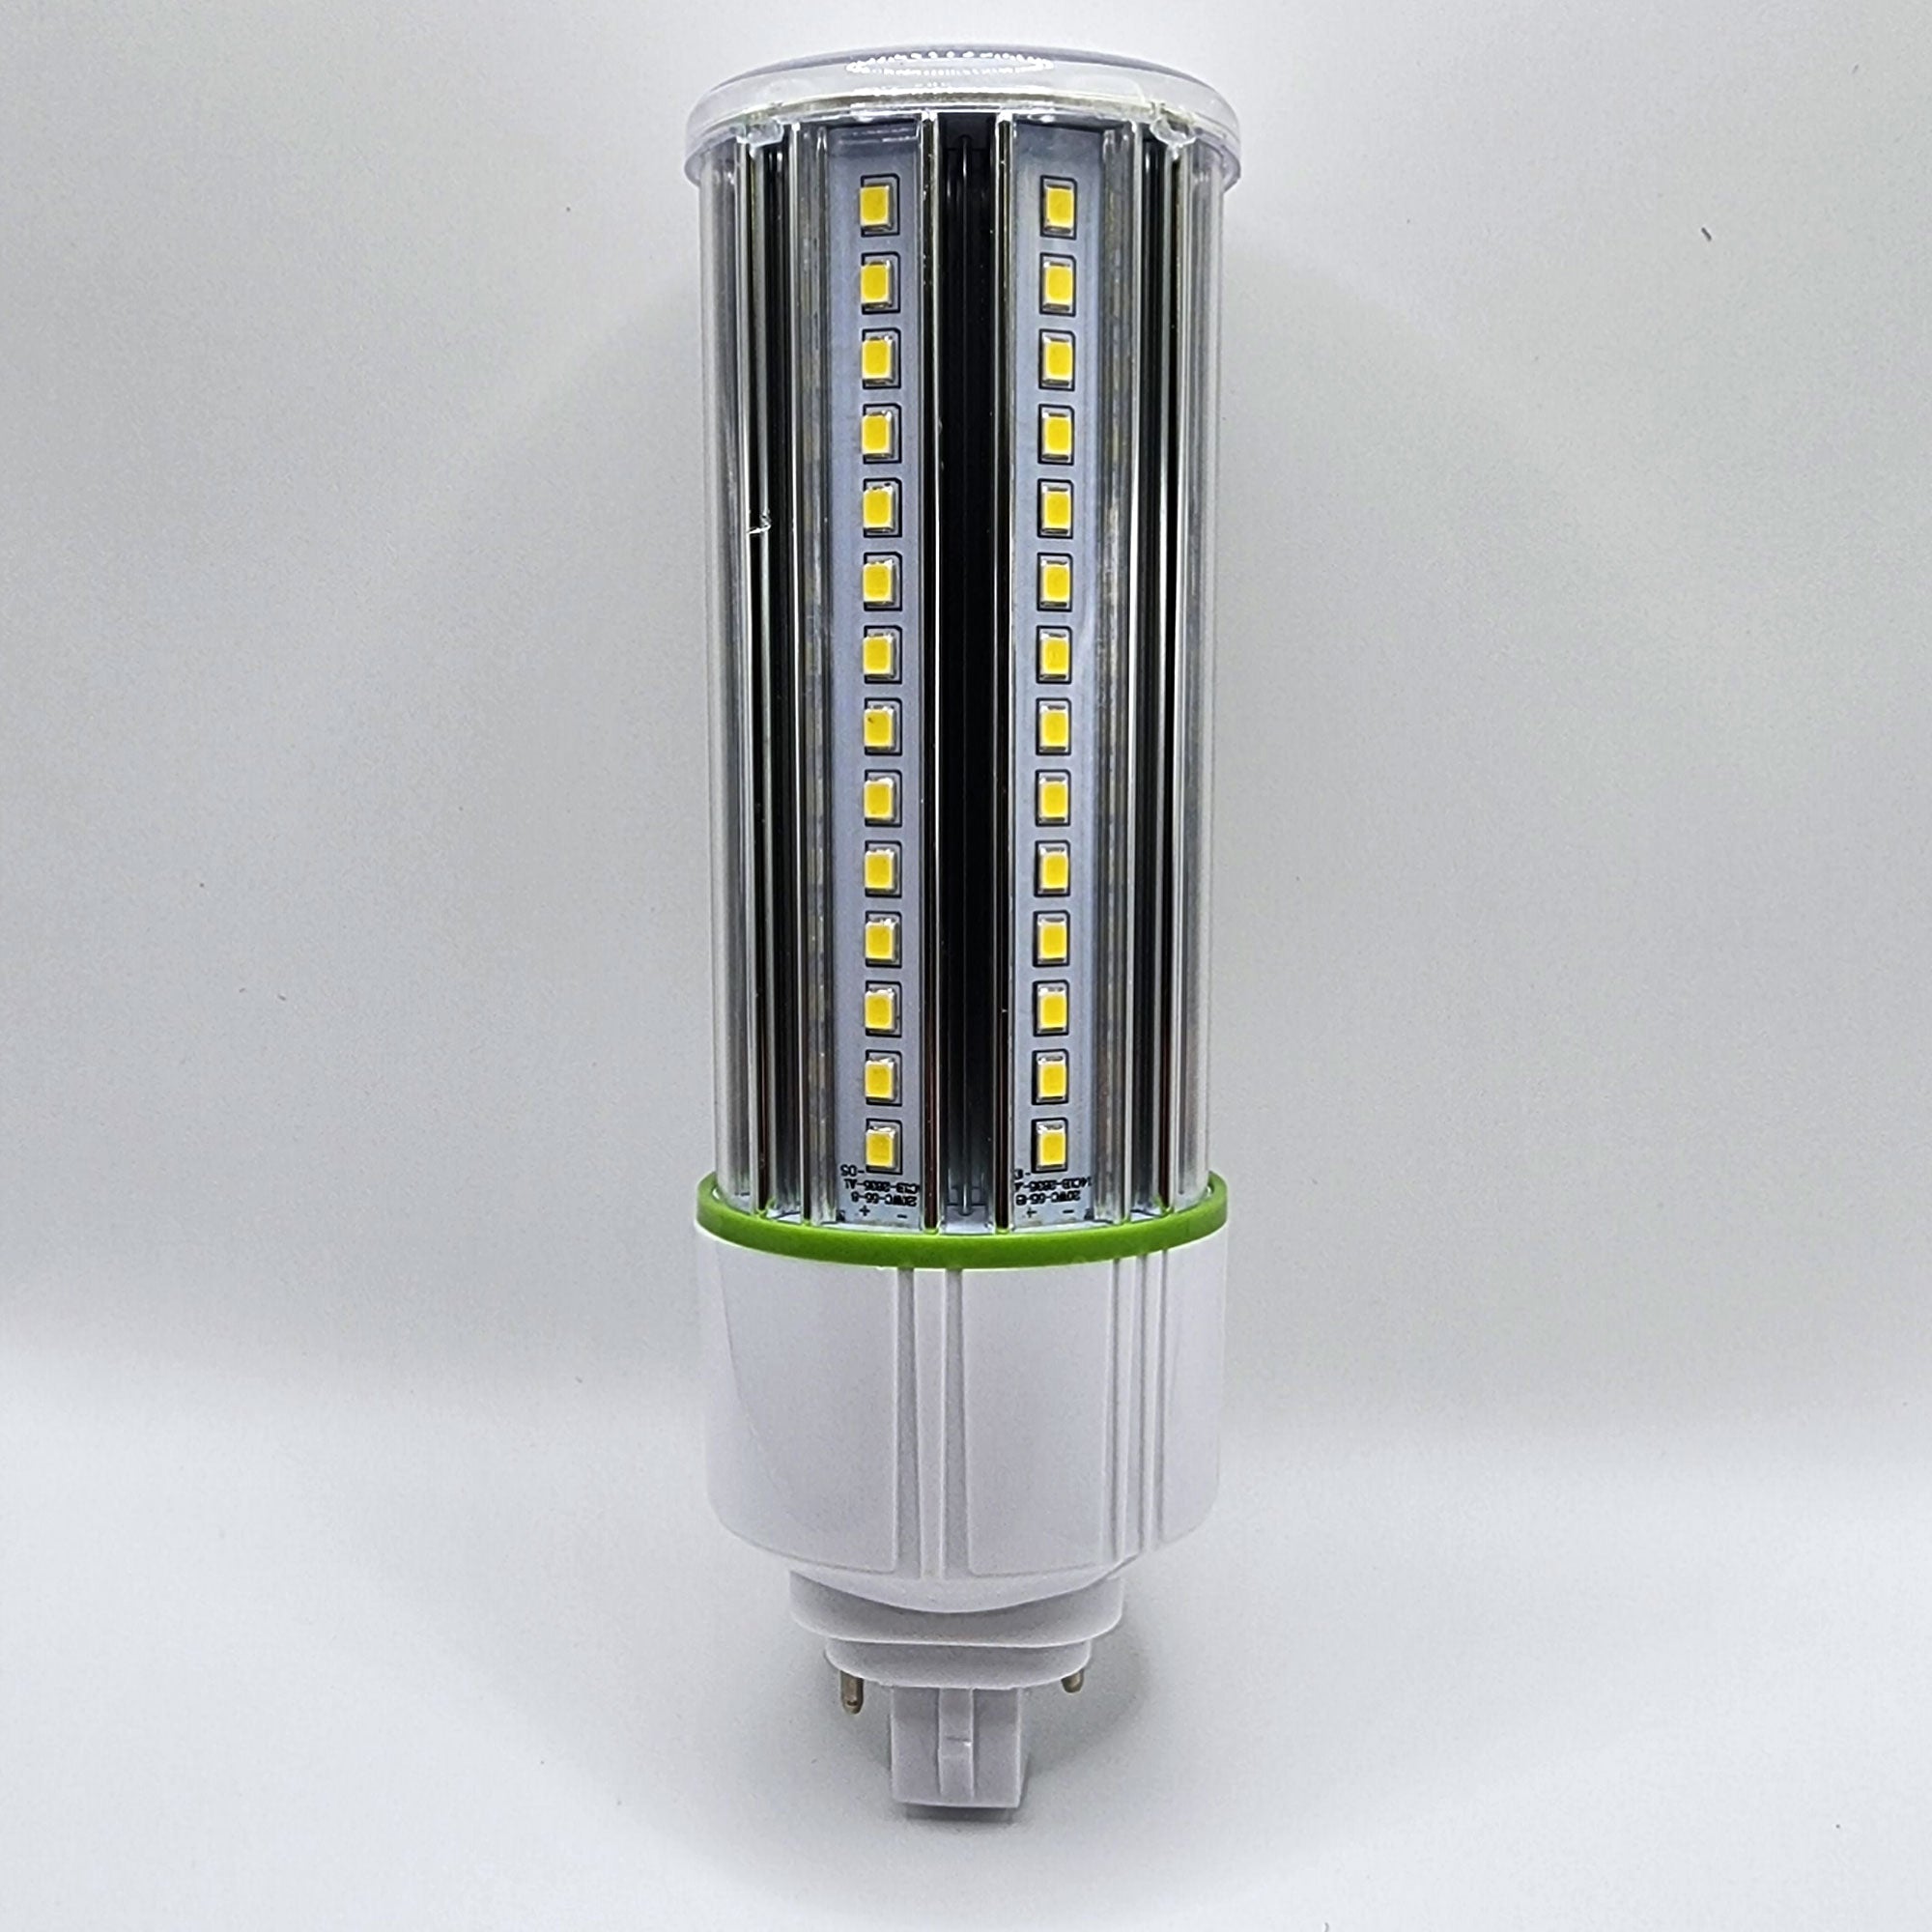 Viribright 15-Watt Vertical PL Corn LED LIght Bulb G24Q/GX24Q (4 PIN)